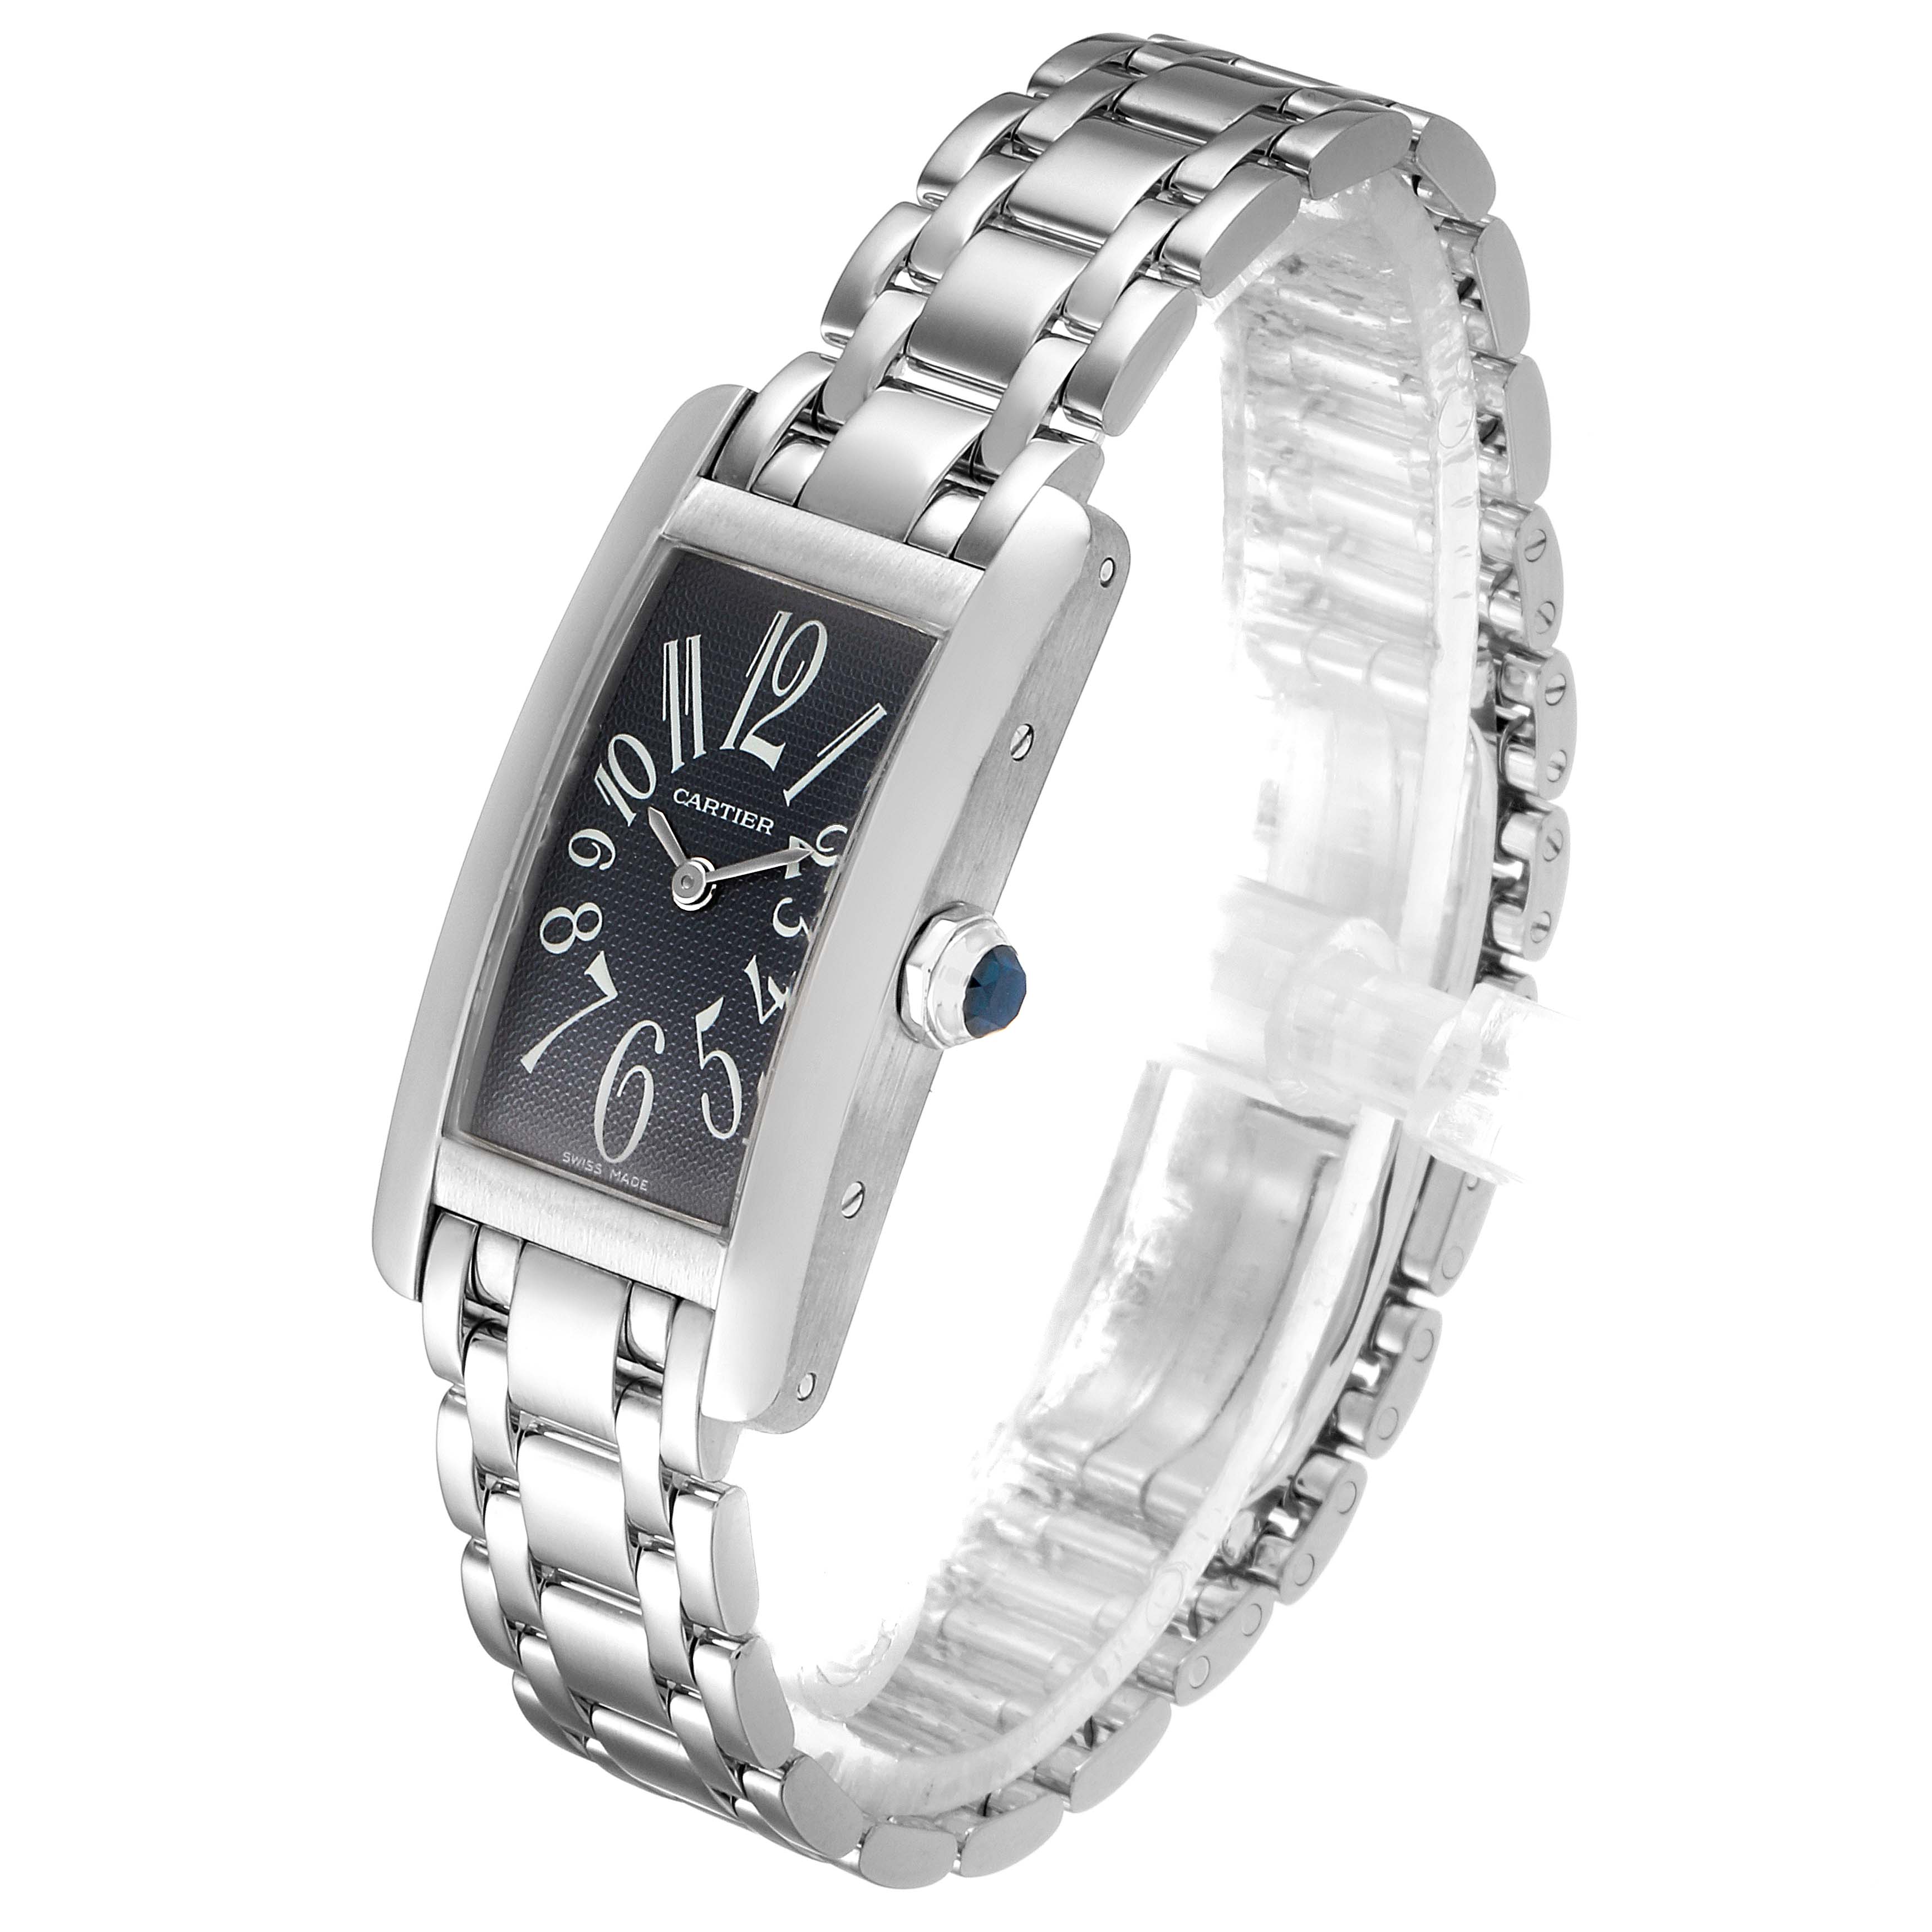 cartier watch 1713 price